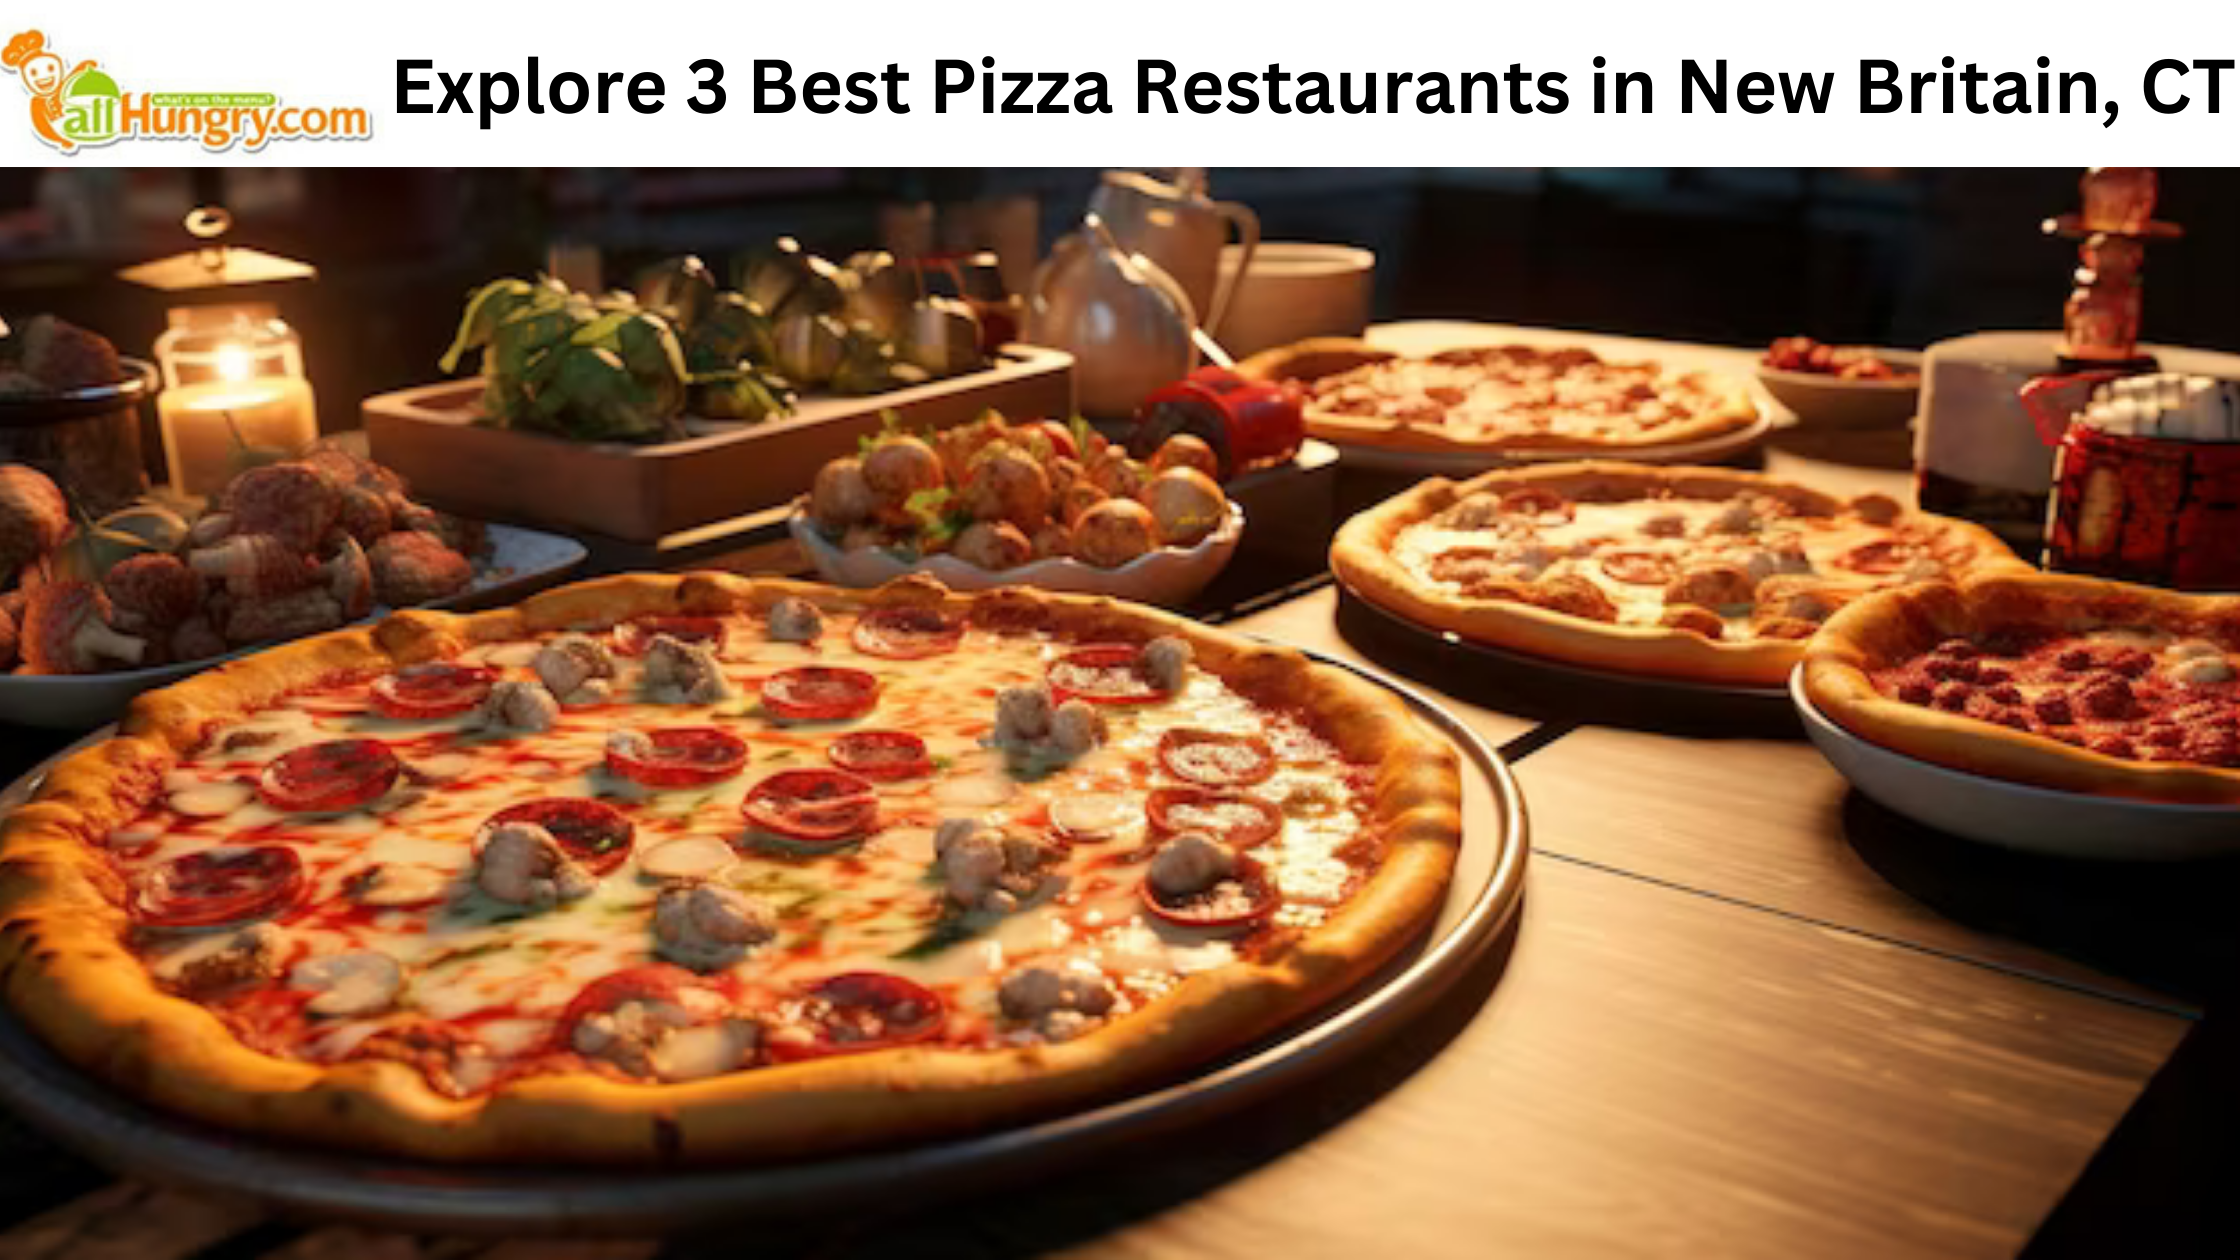 Explore 3 Best Pizza Restaurants in New Britain, CT